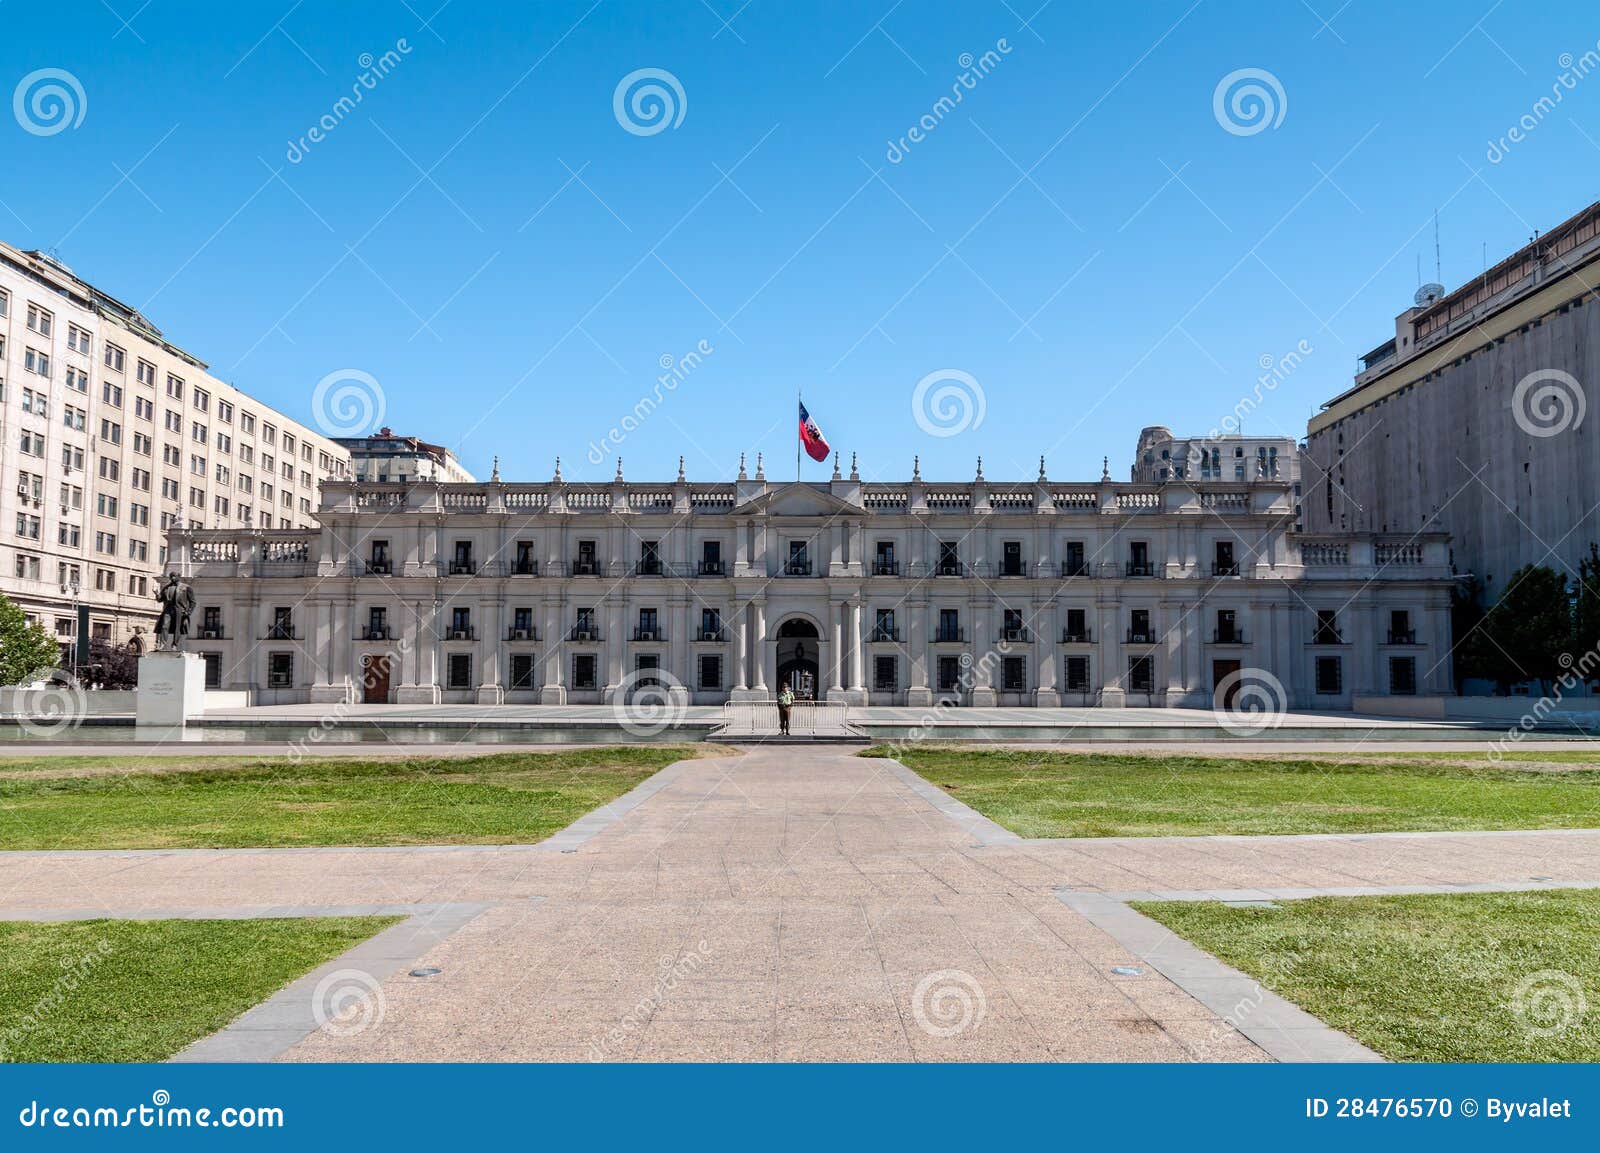 presidential palace chile, la moneda